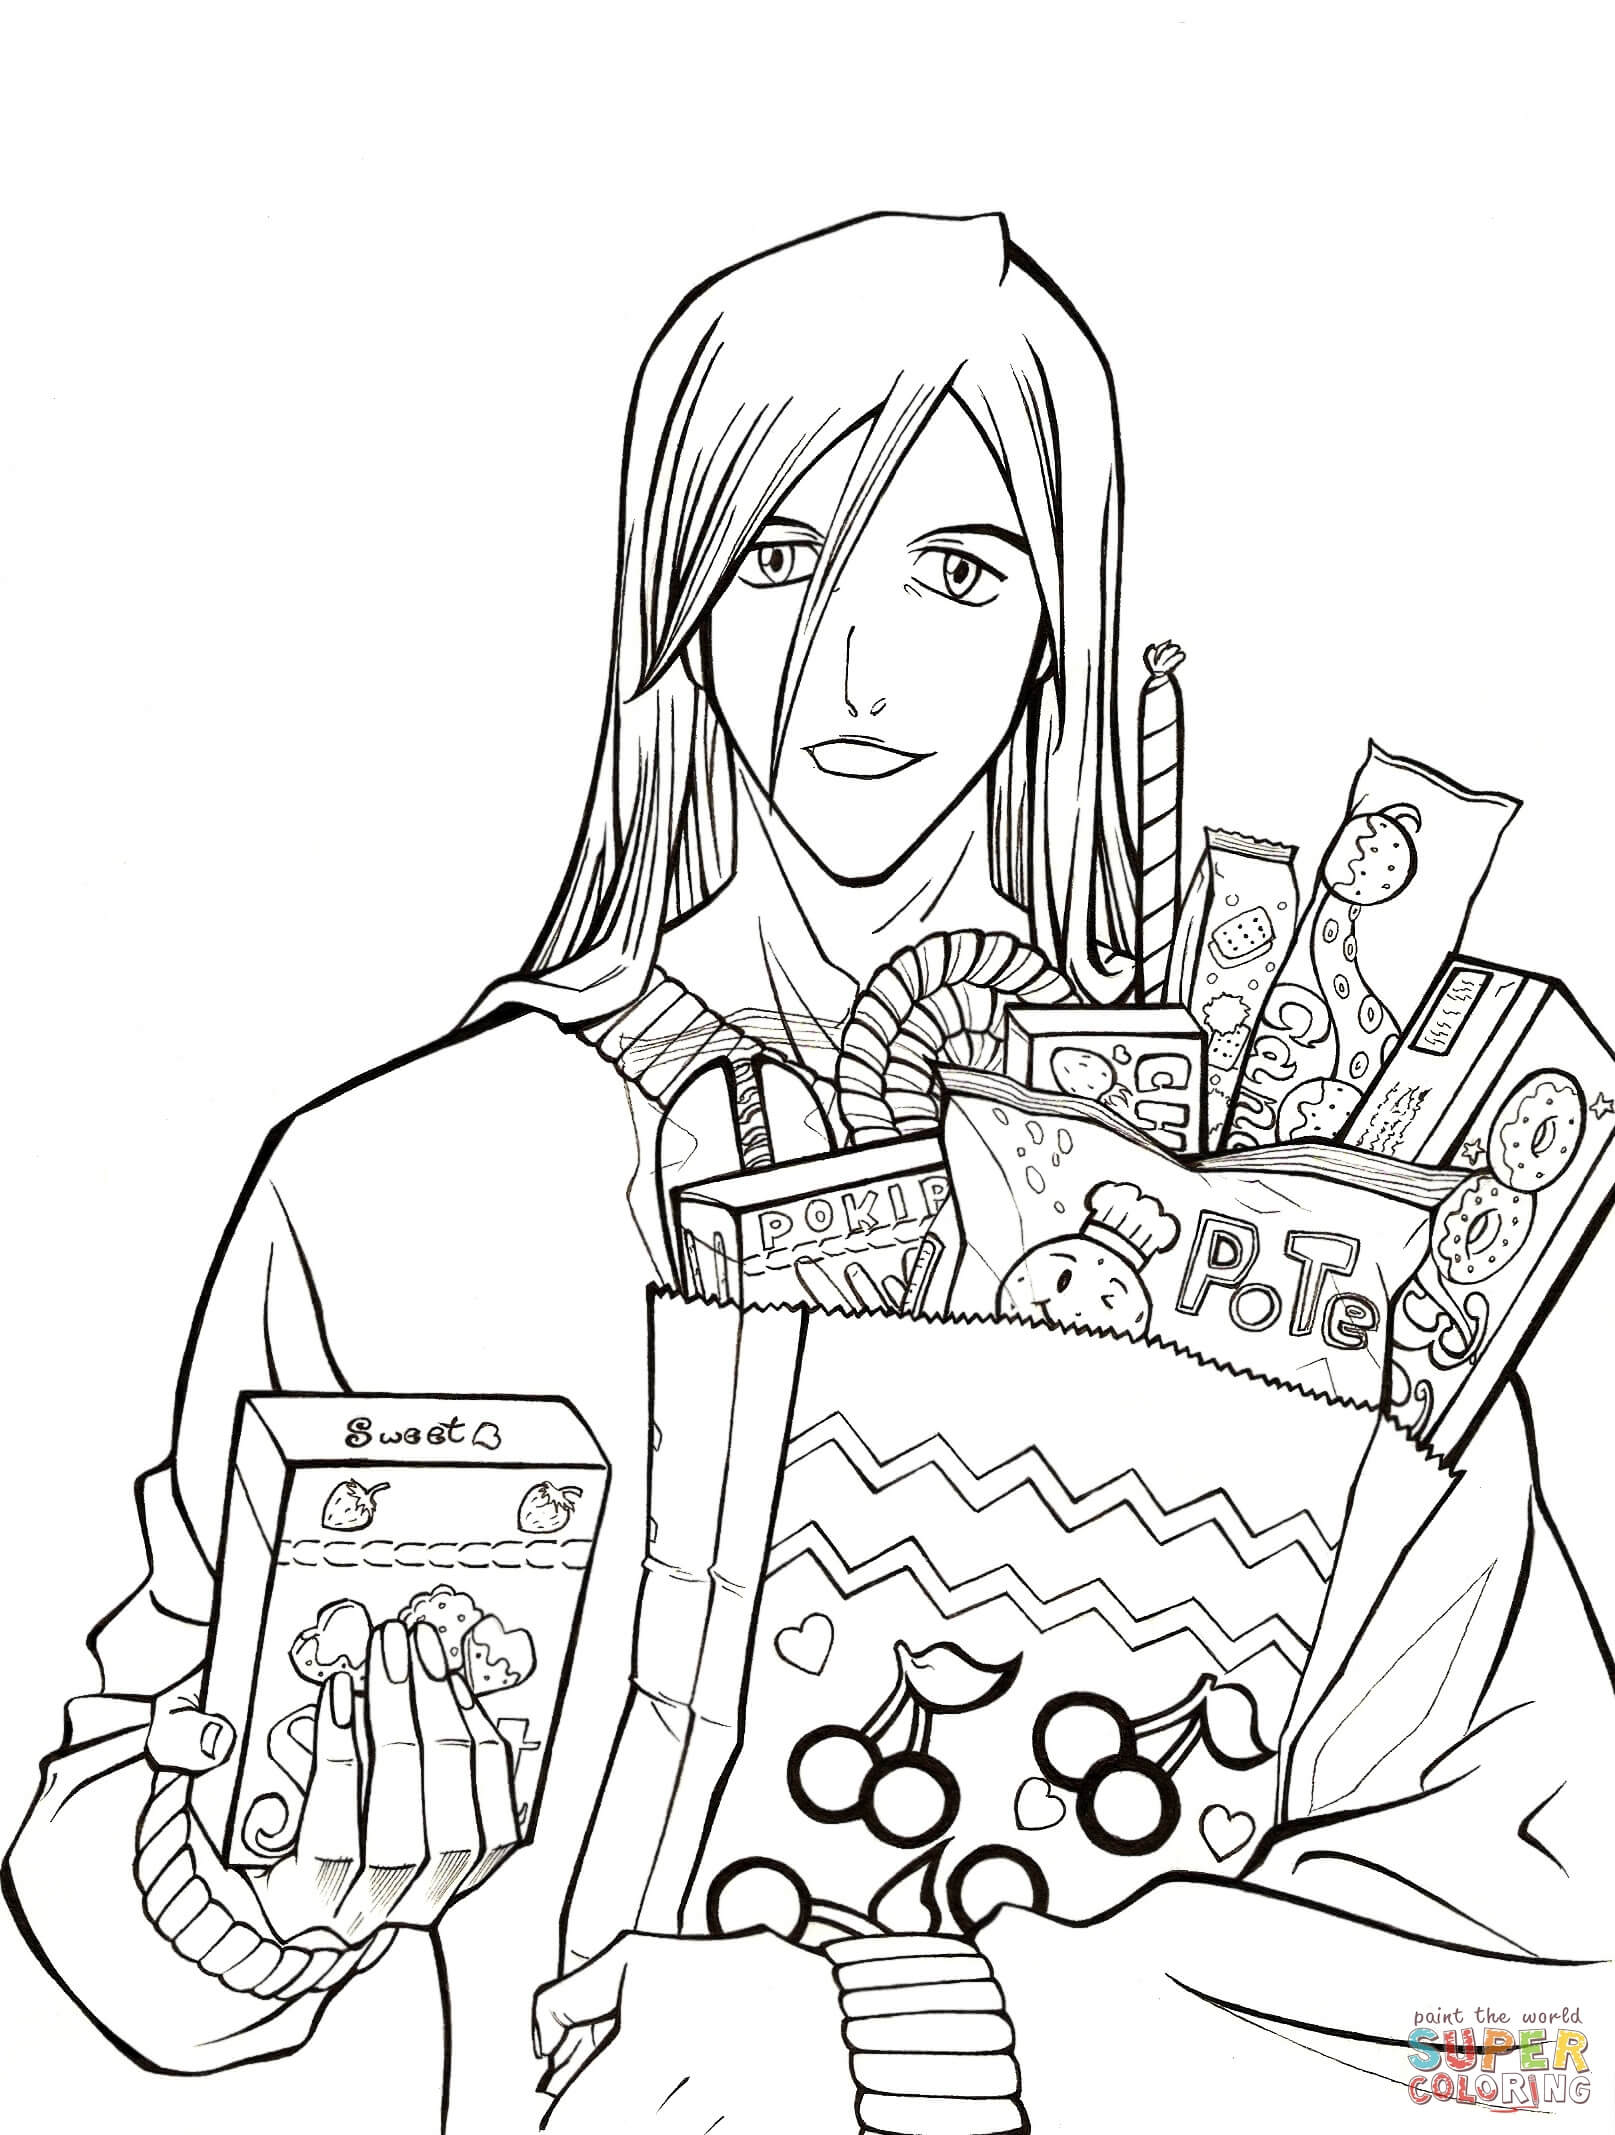 Ukitake Taichou: Who wants some candy? from Manga Bleach coloring ...